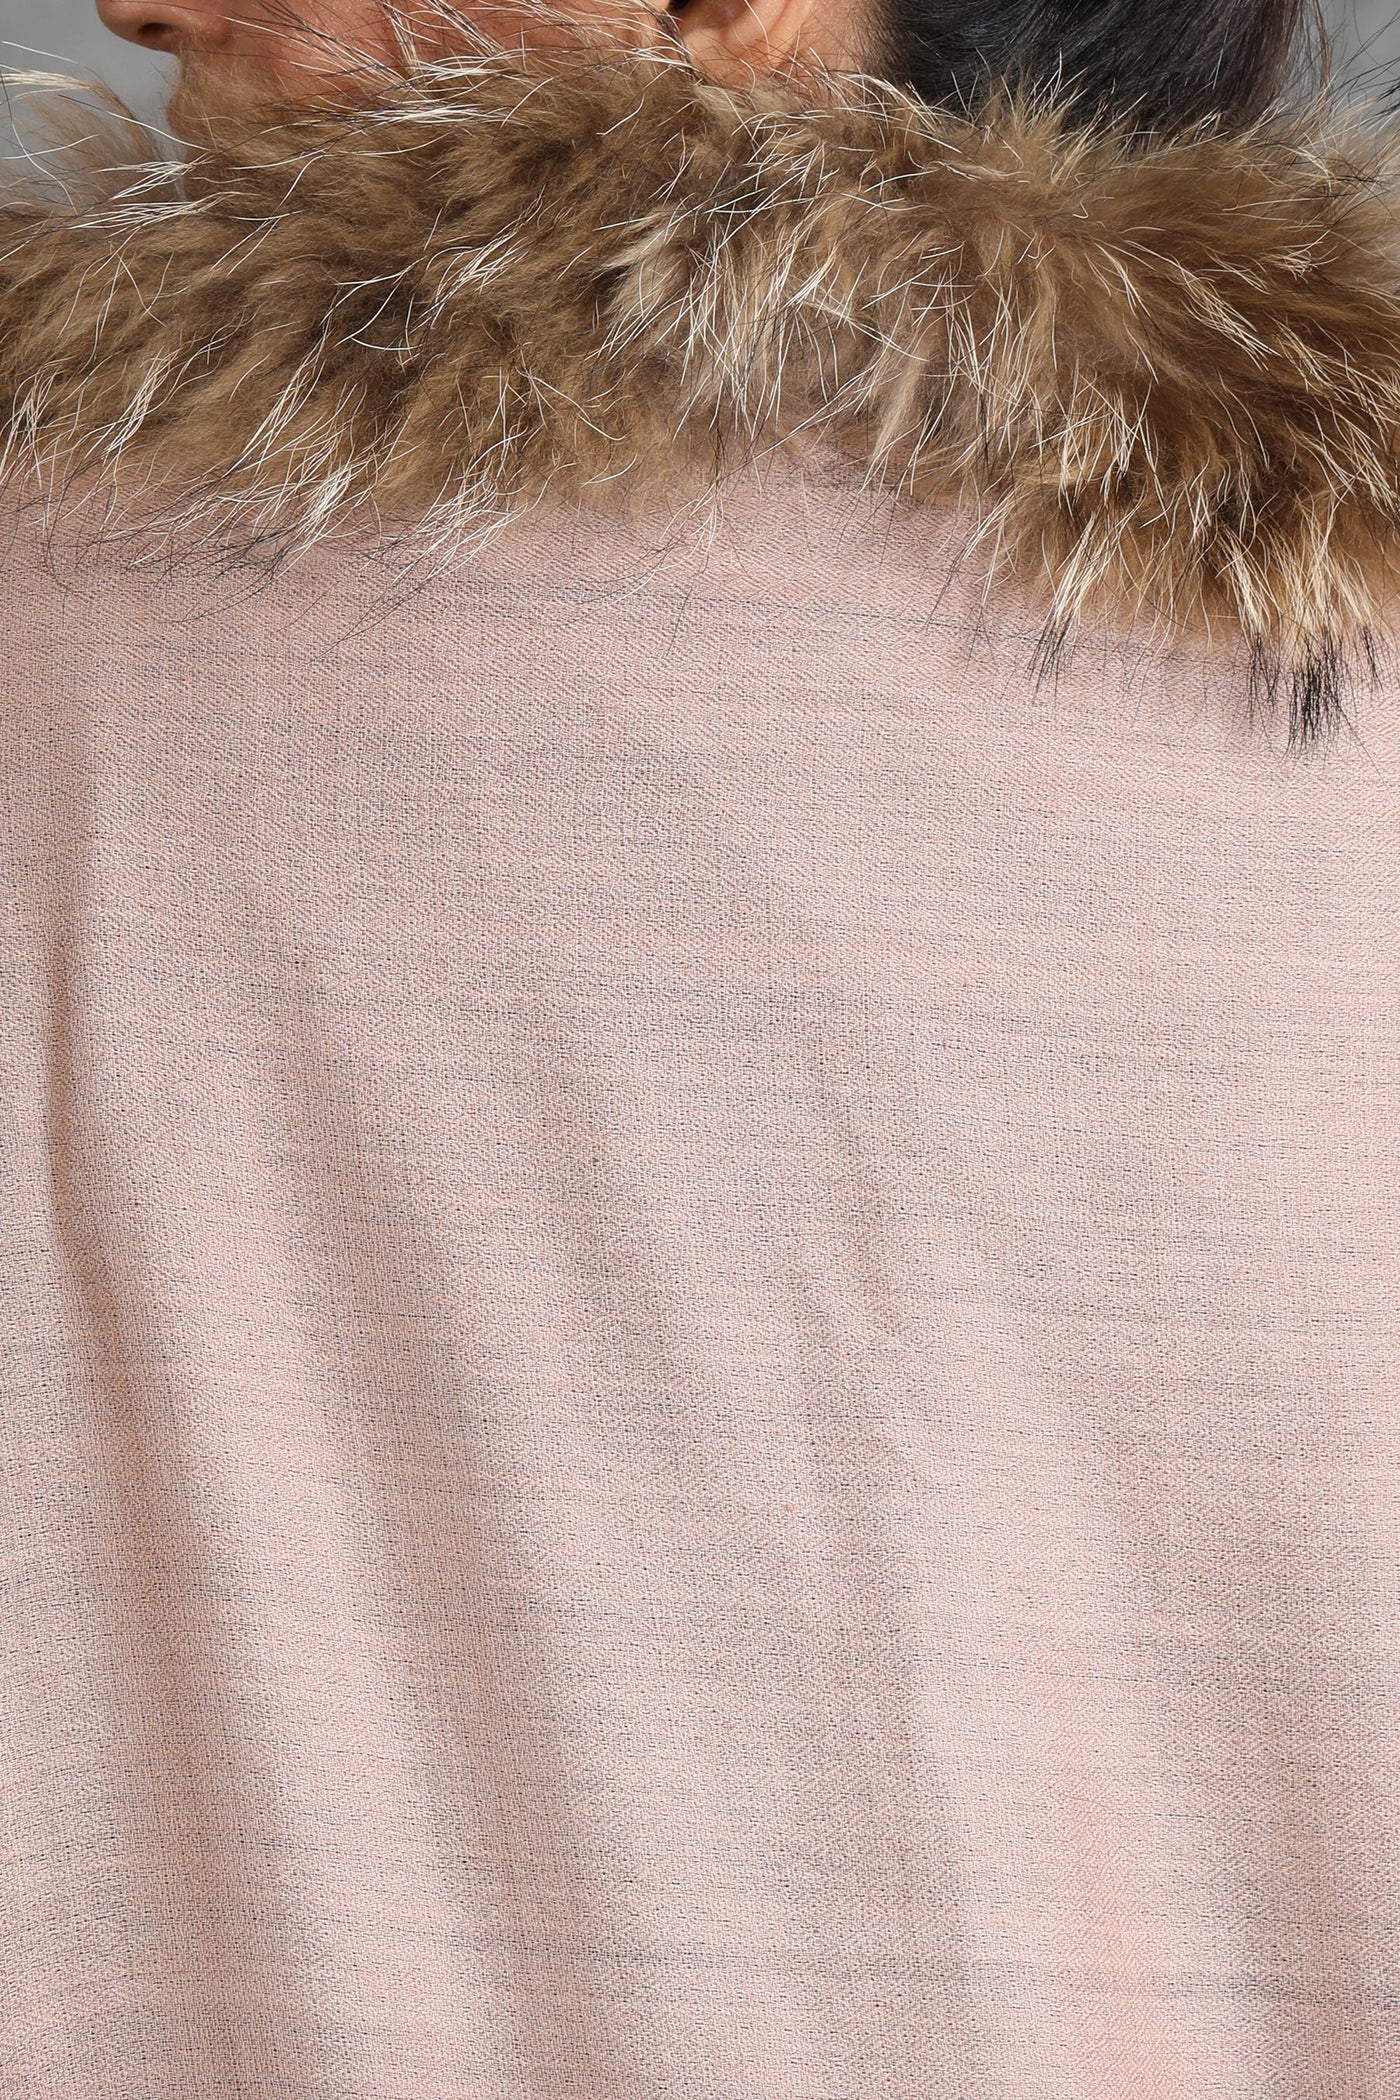 Cashmere Plain Stole With Hight Quality Ombre Fur Stole